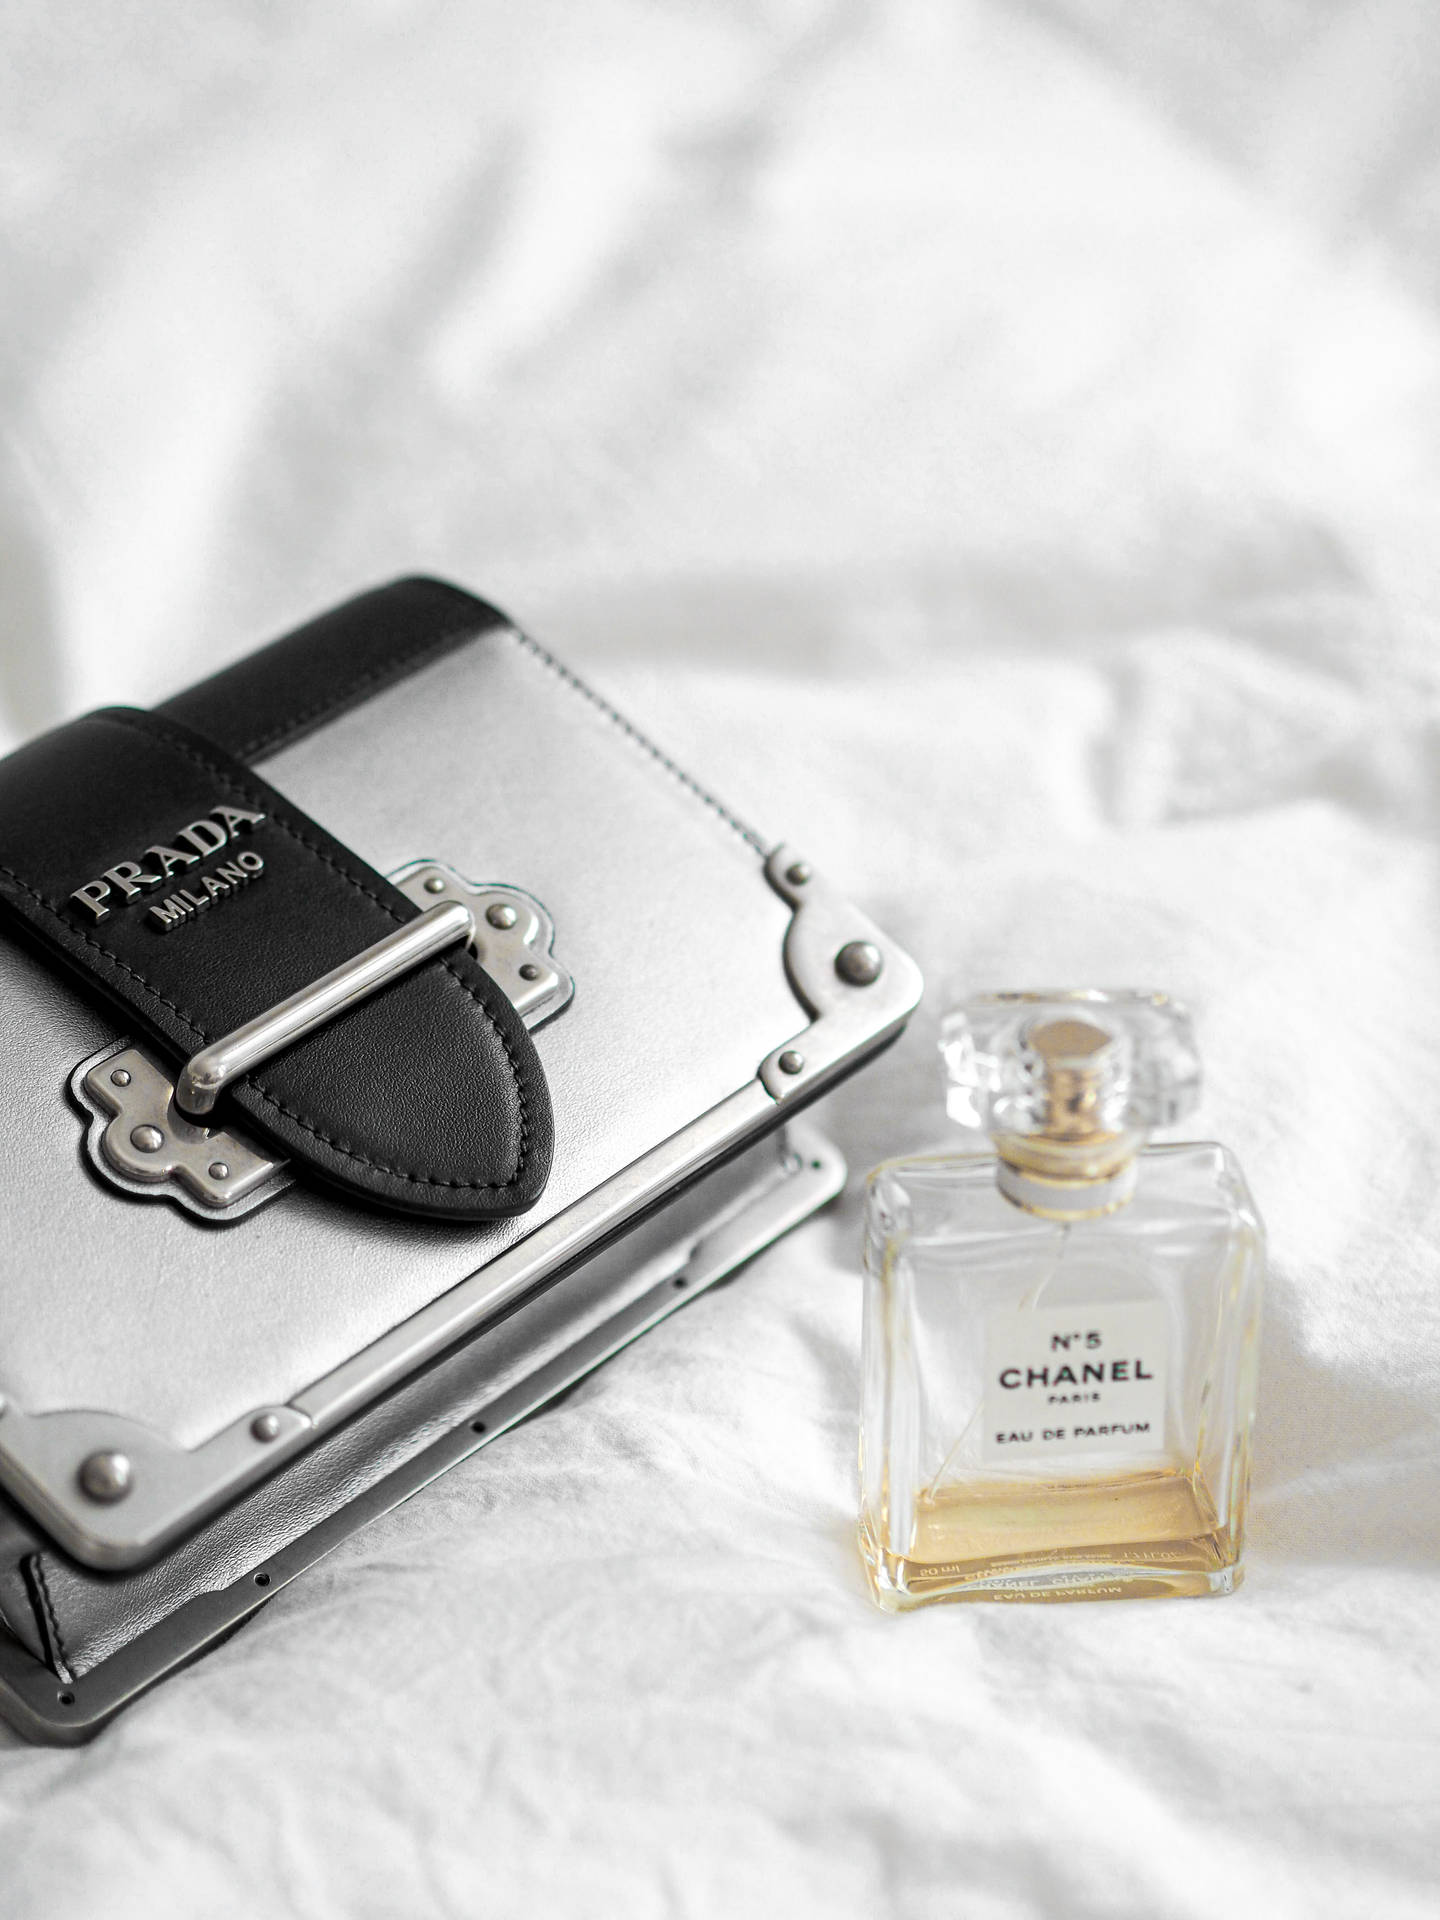 Prada Bag Chanel Perfume Background